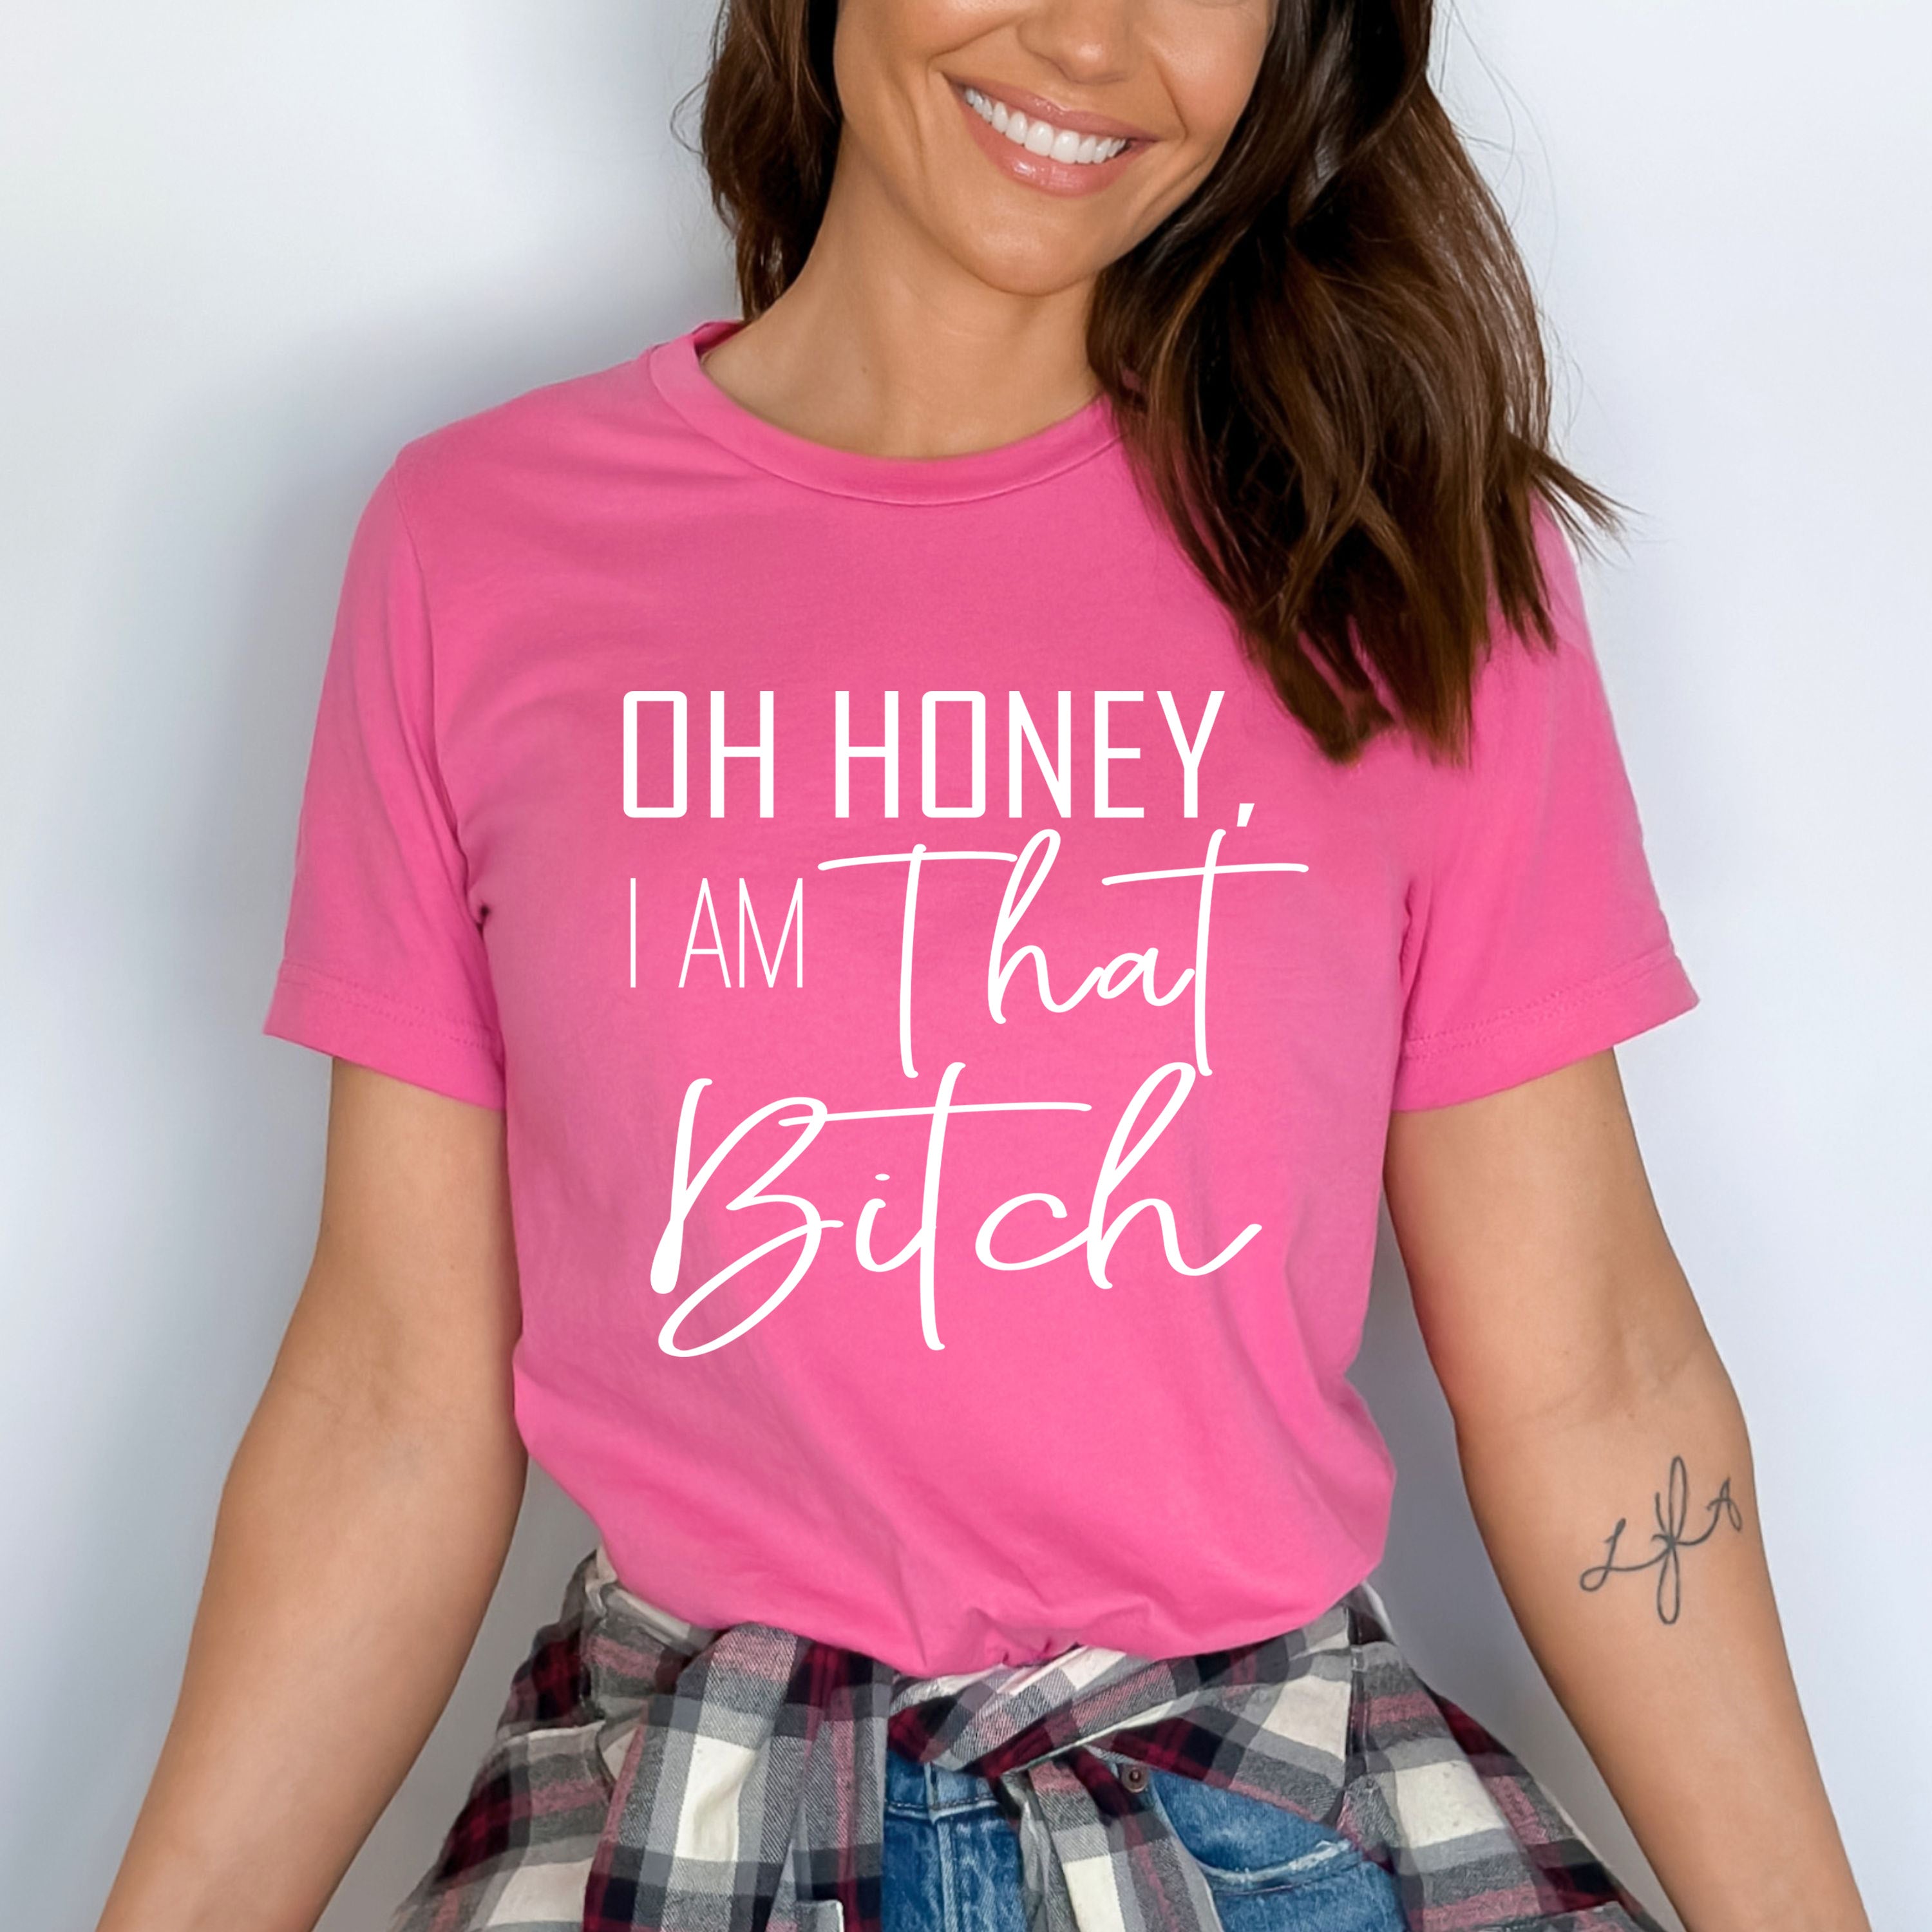 "Oh honey I am that Bitch"